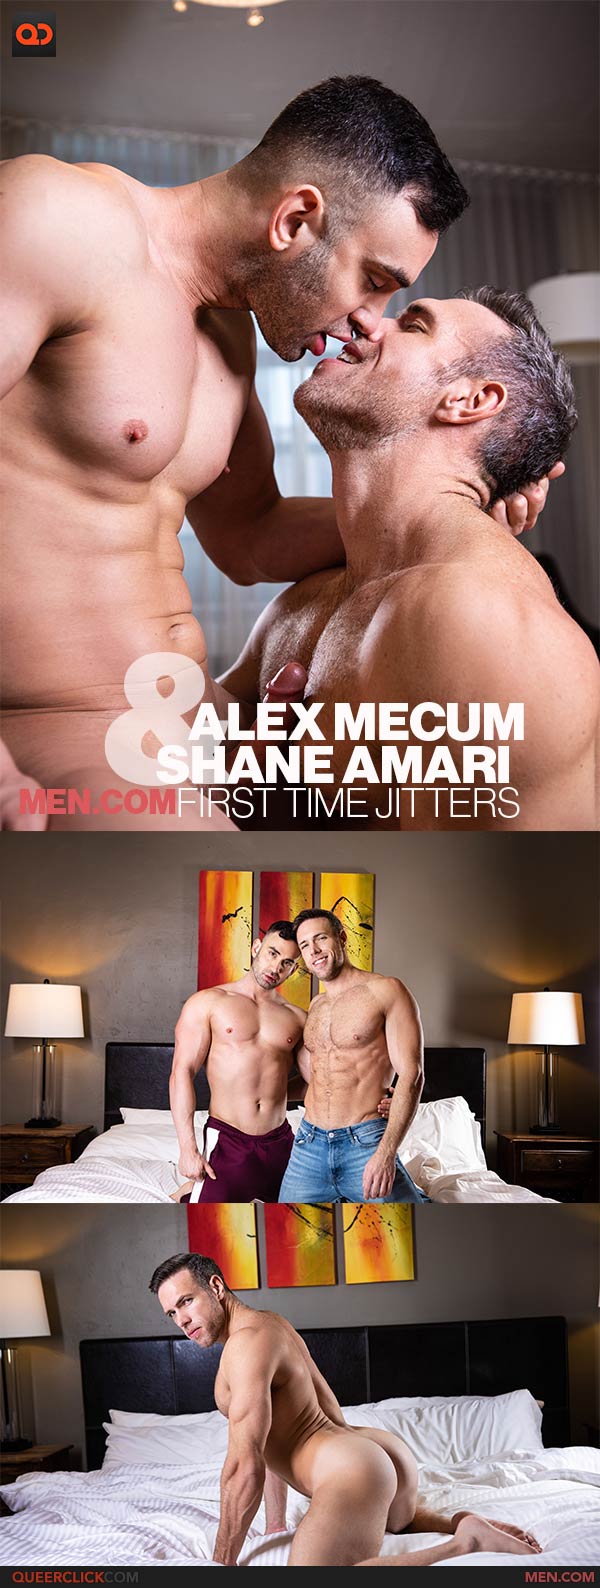 Men.com: Alex Mecum and Shane Amari 